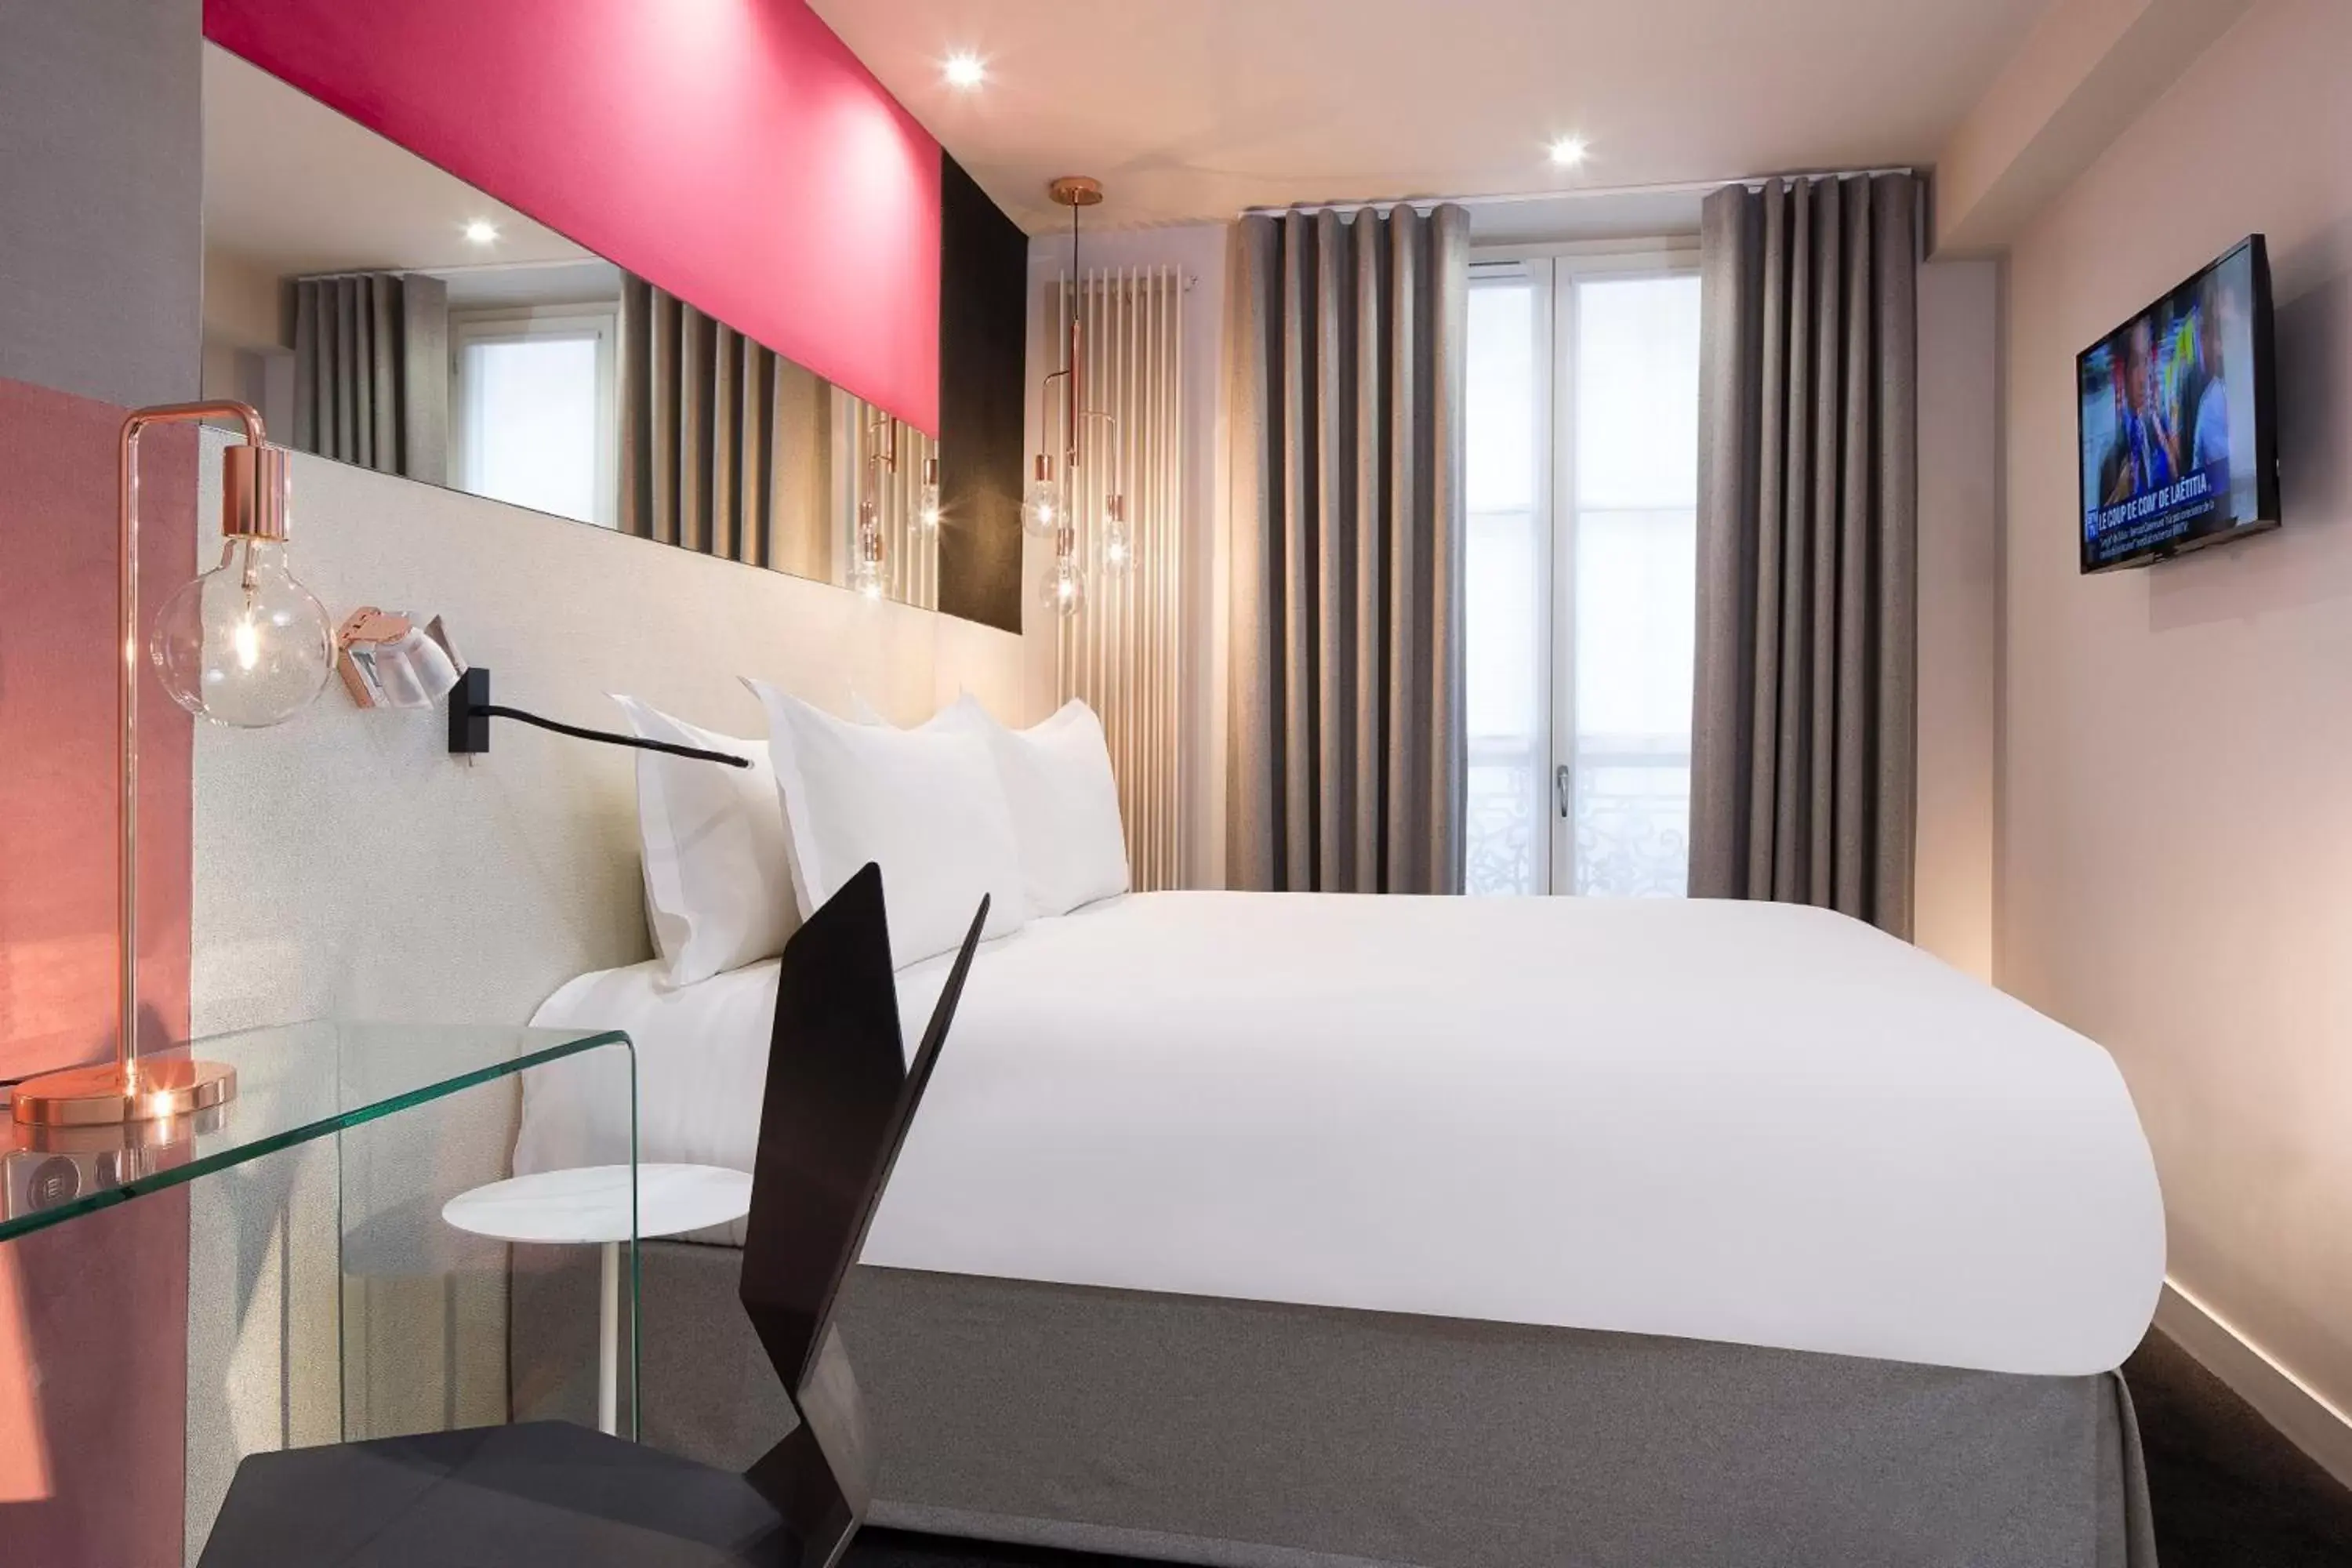 Double Room in Hotel Duette Paris